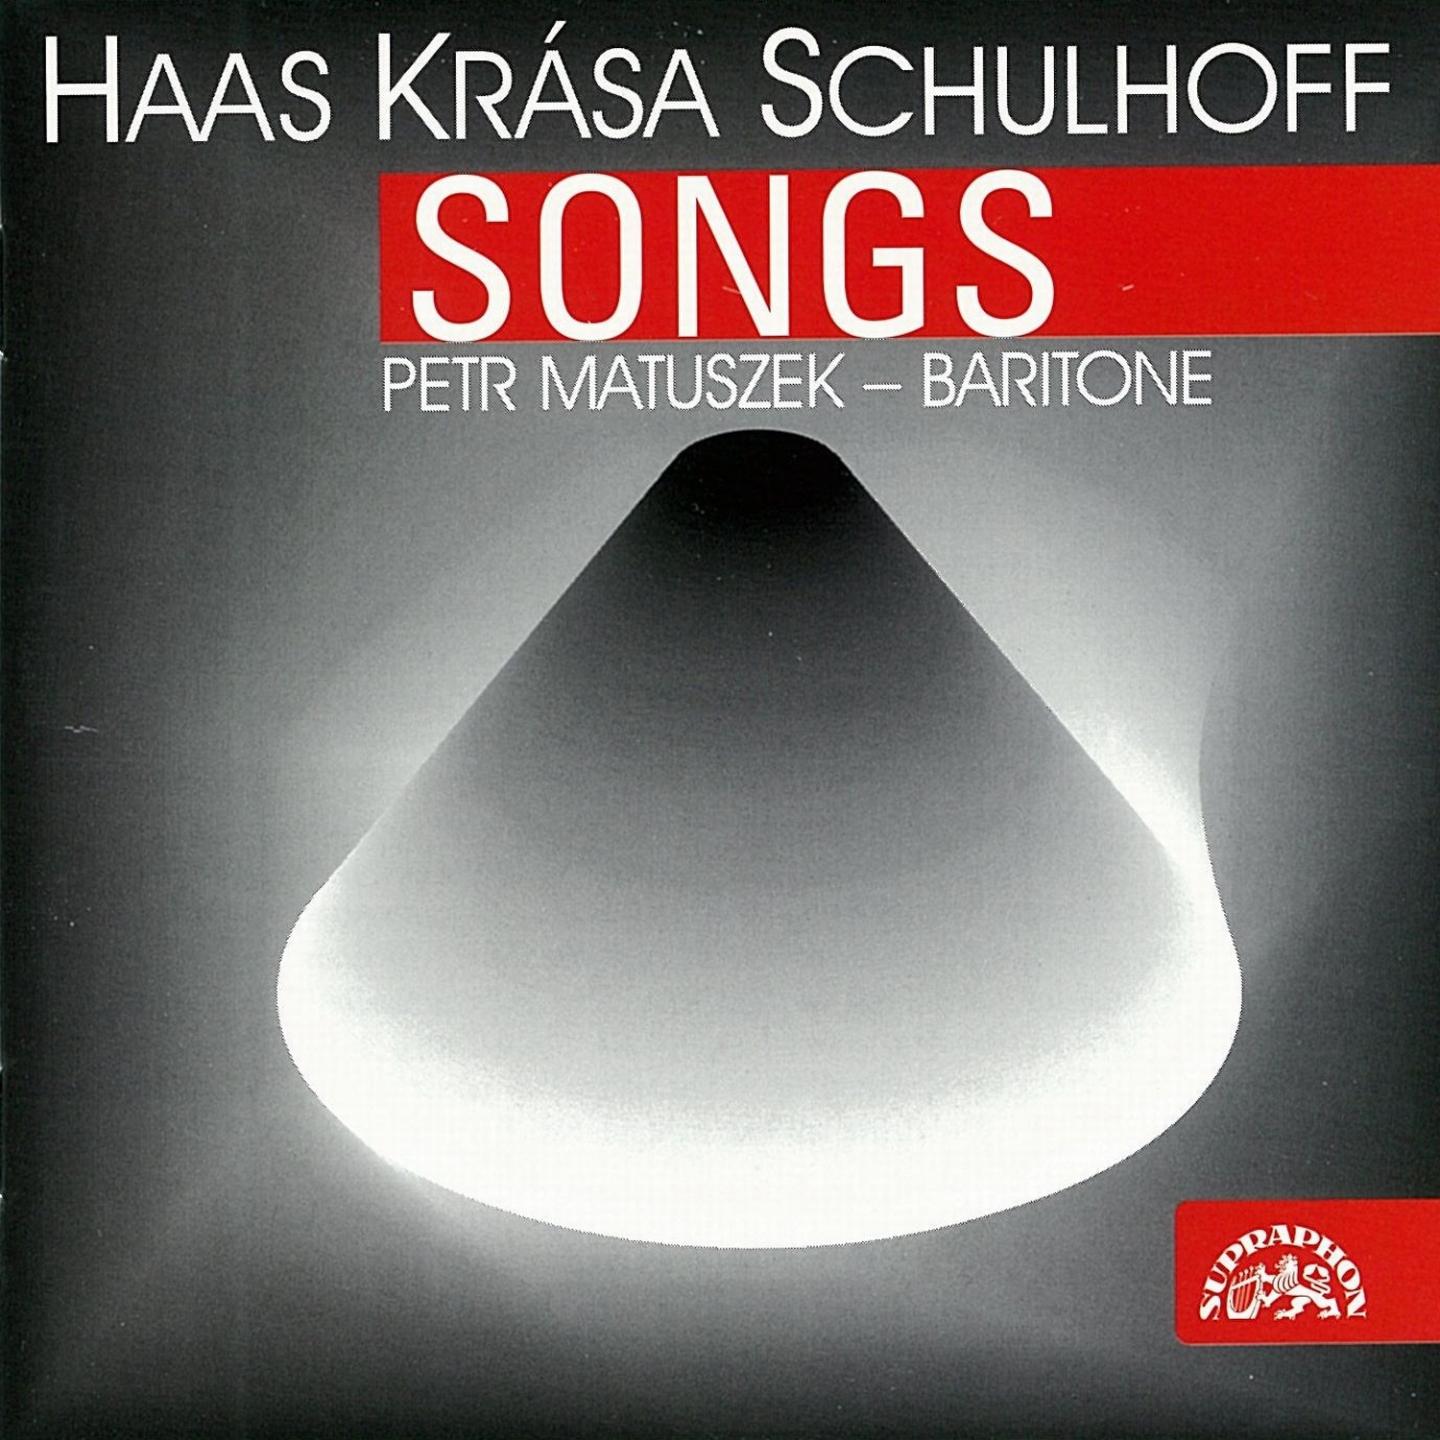 Haas, Kra sa, Schulhoff: Songs